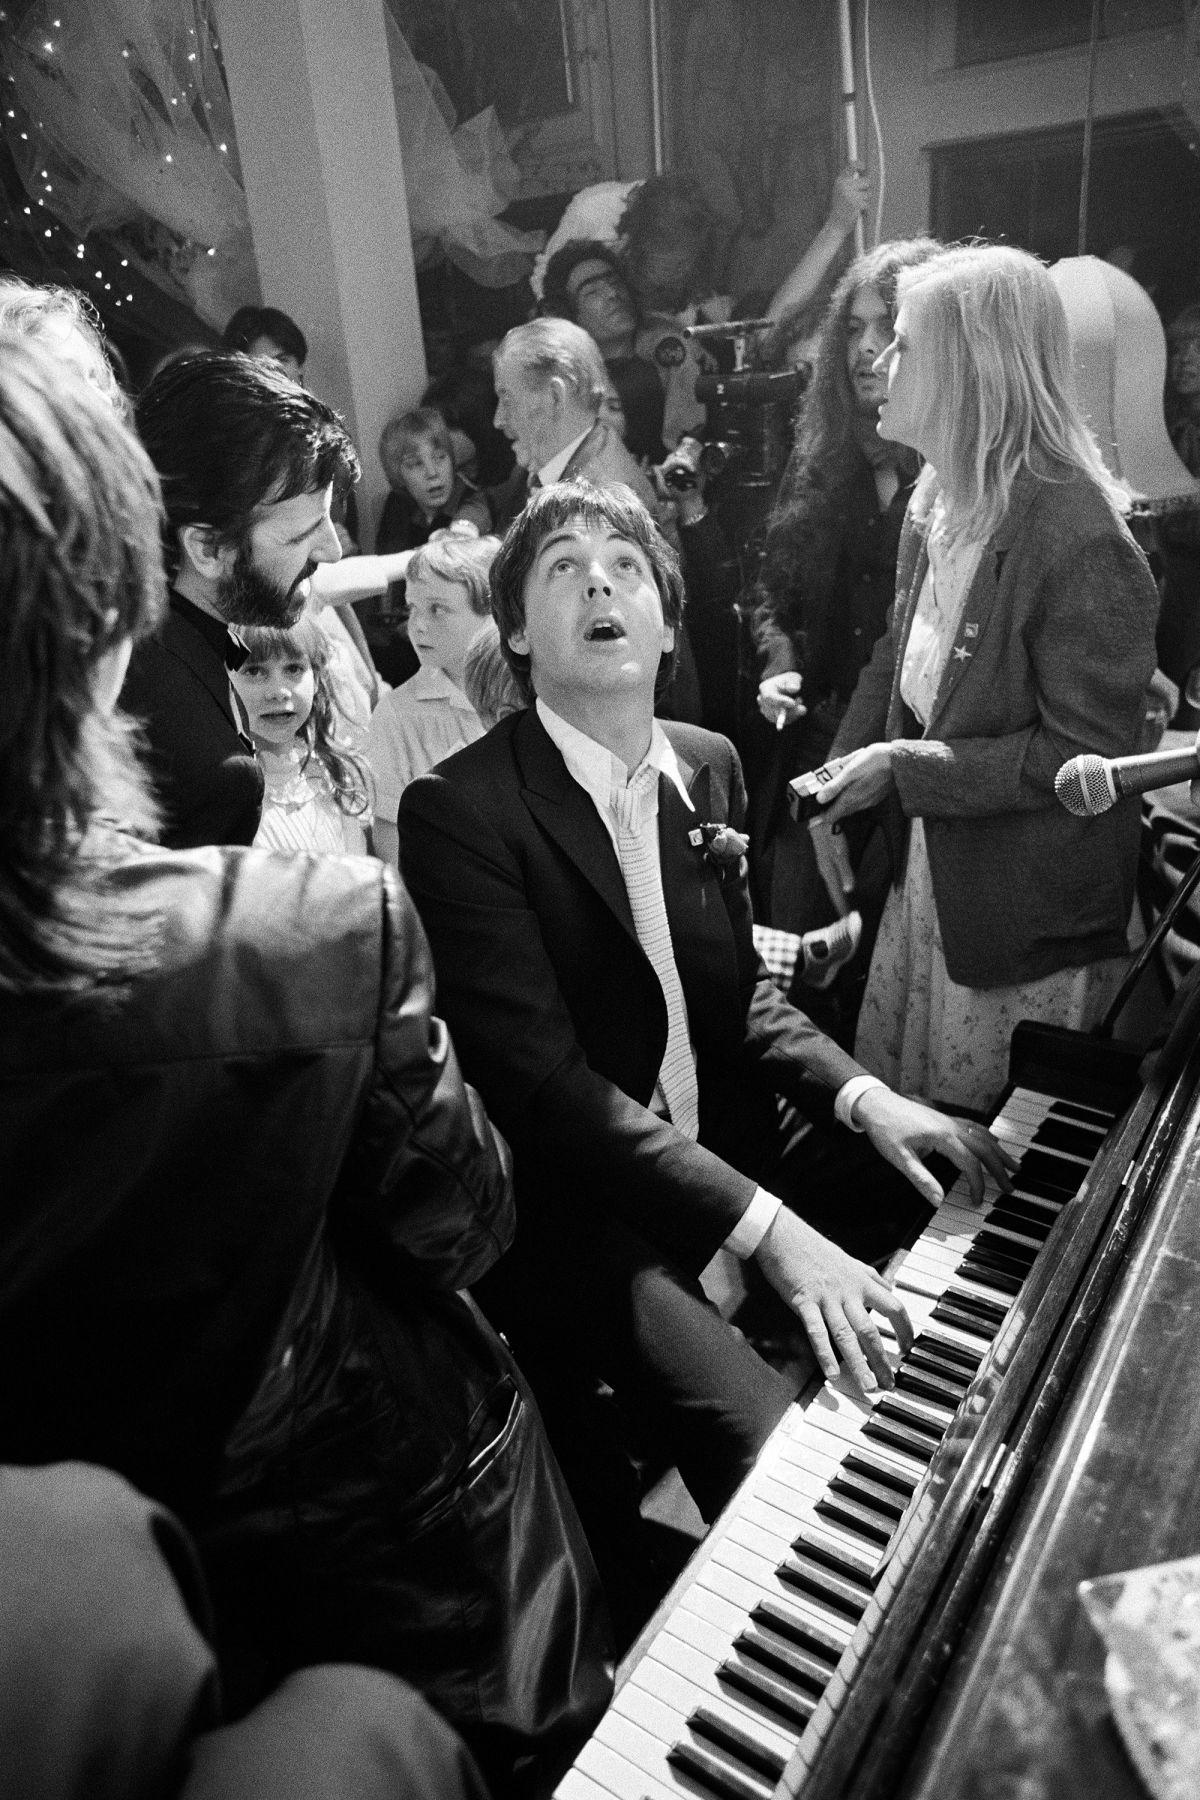 Terry O'Neill Figurative Photograph - Paul McCartney at Ringo Starr's Wedding (Signed)